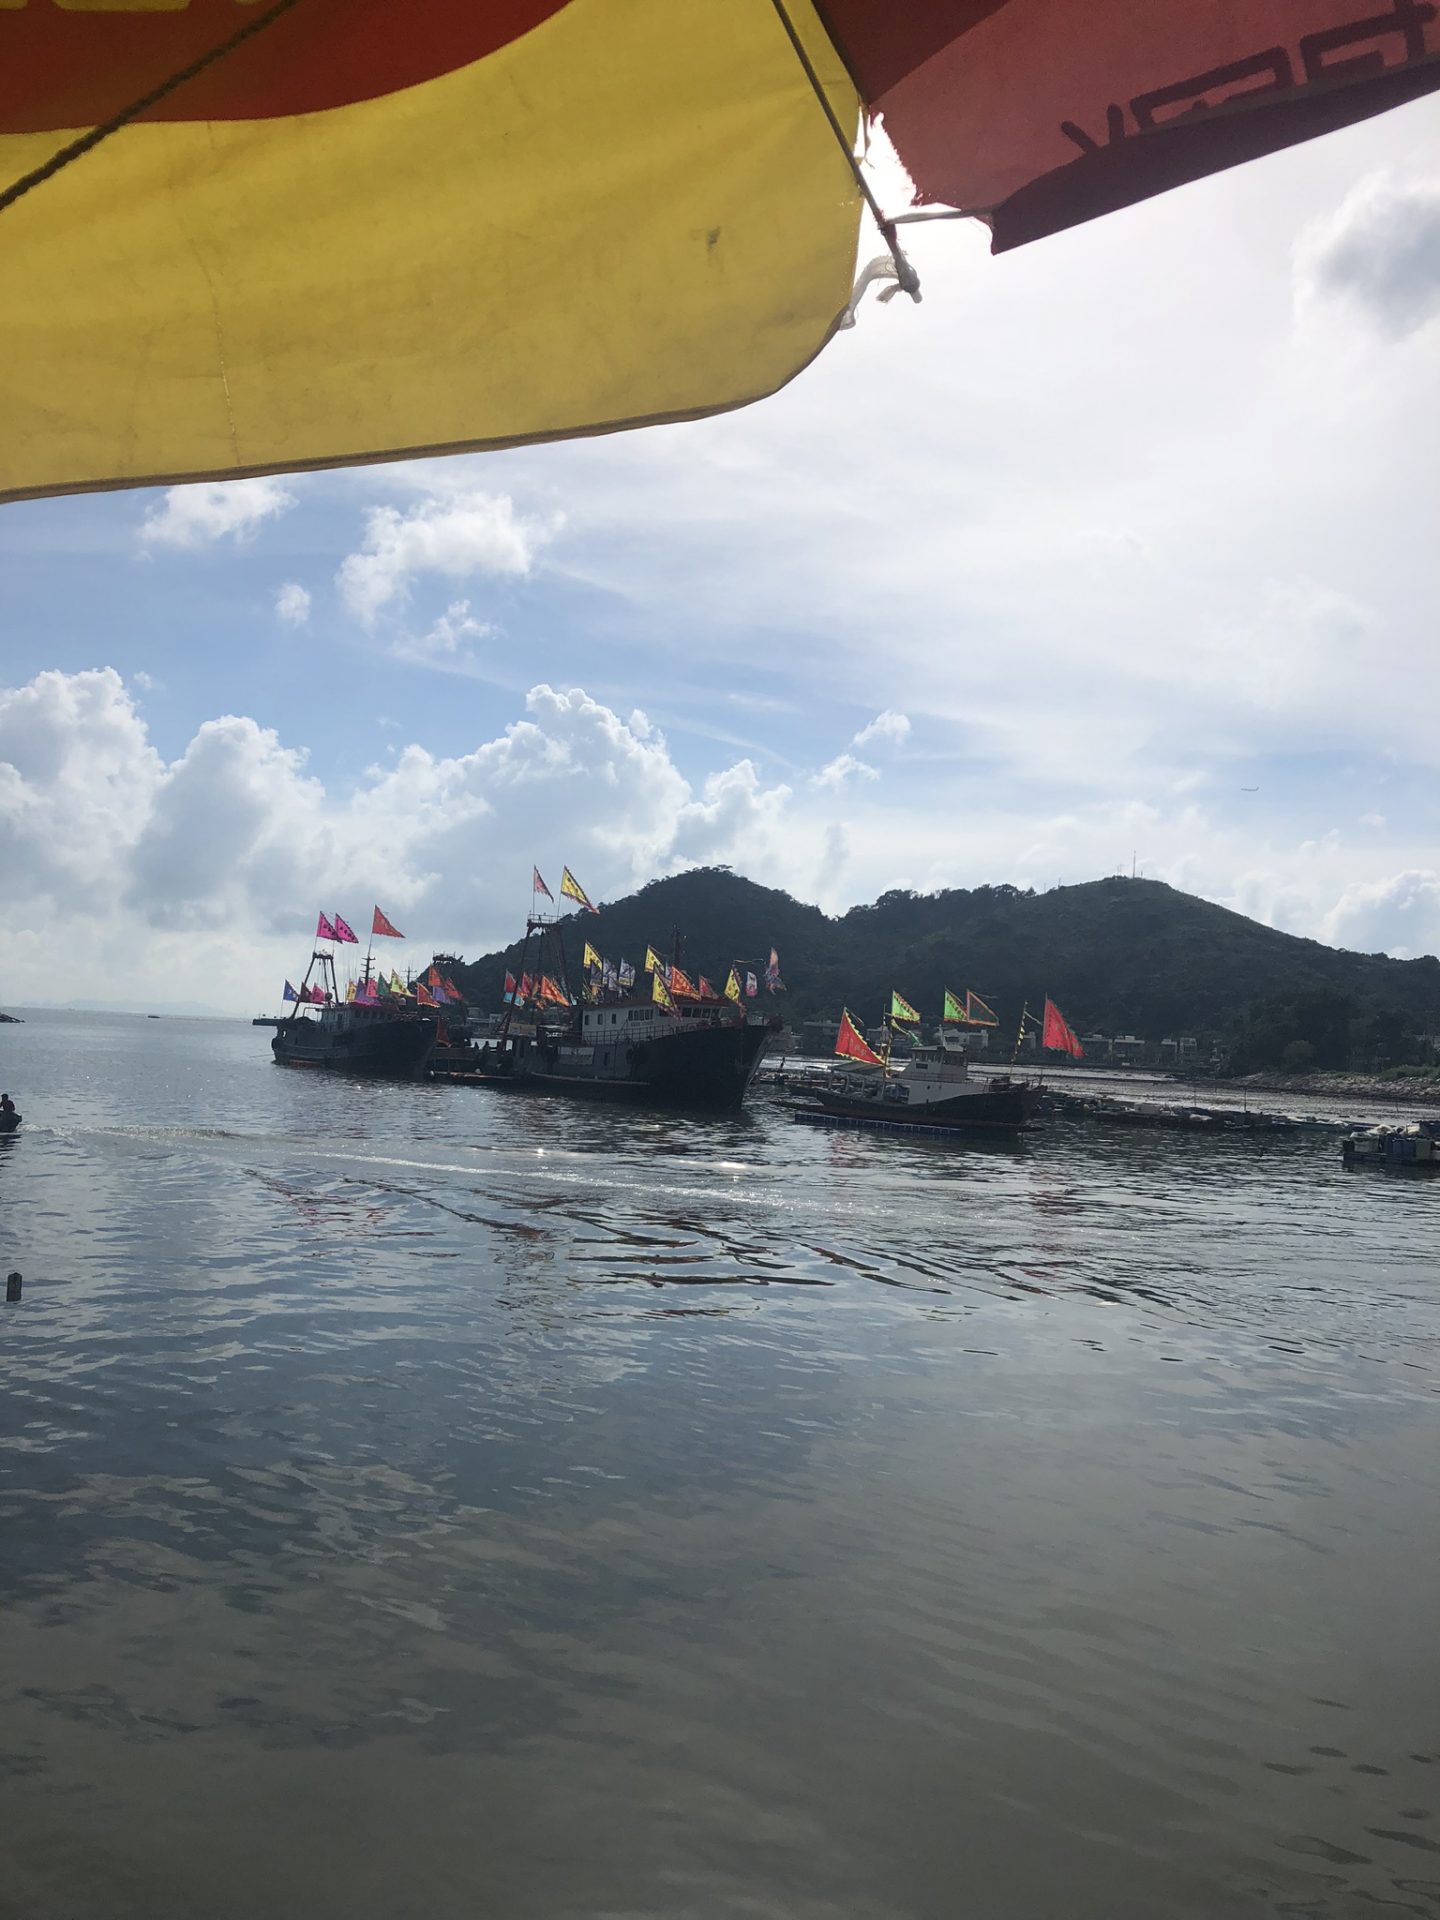 Tai O Fishing Village, Lantau Island